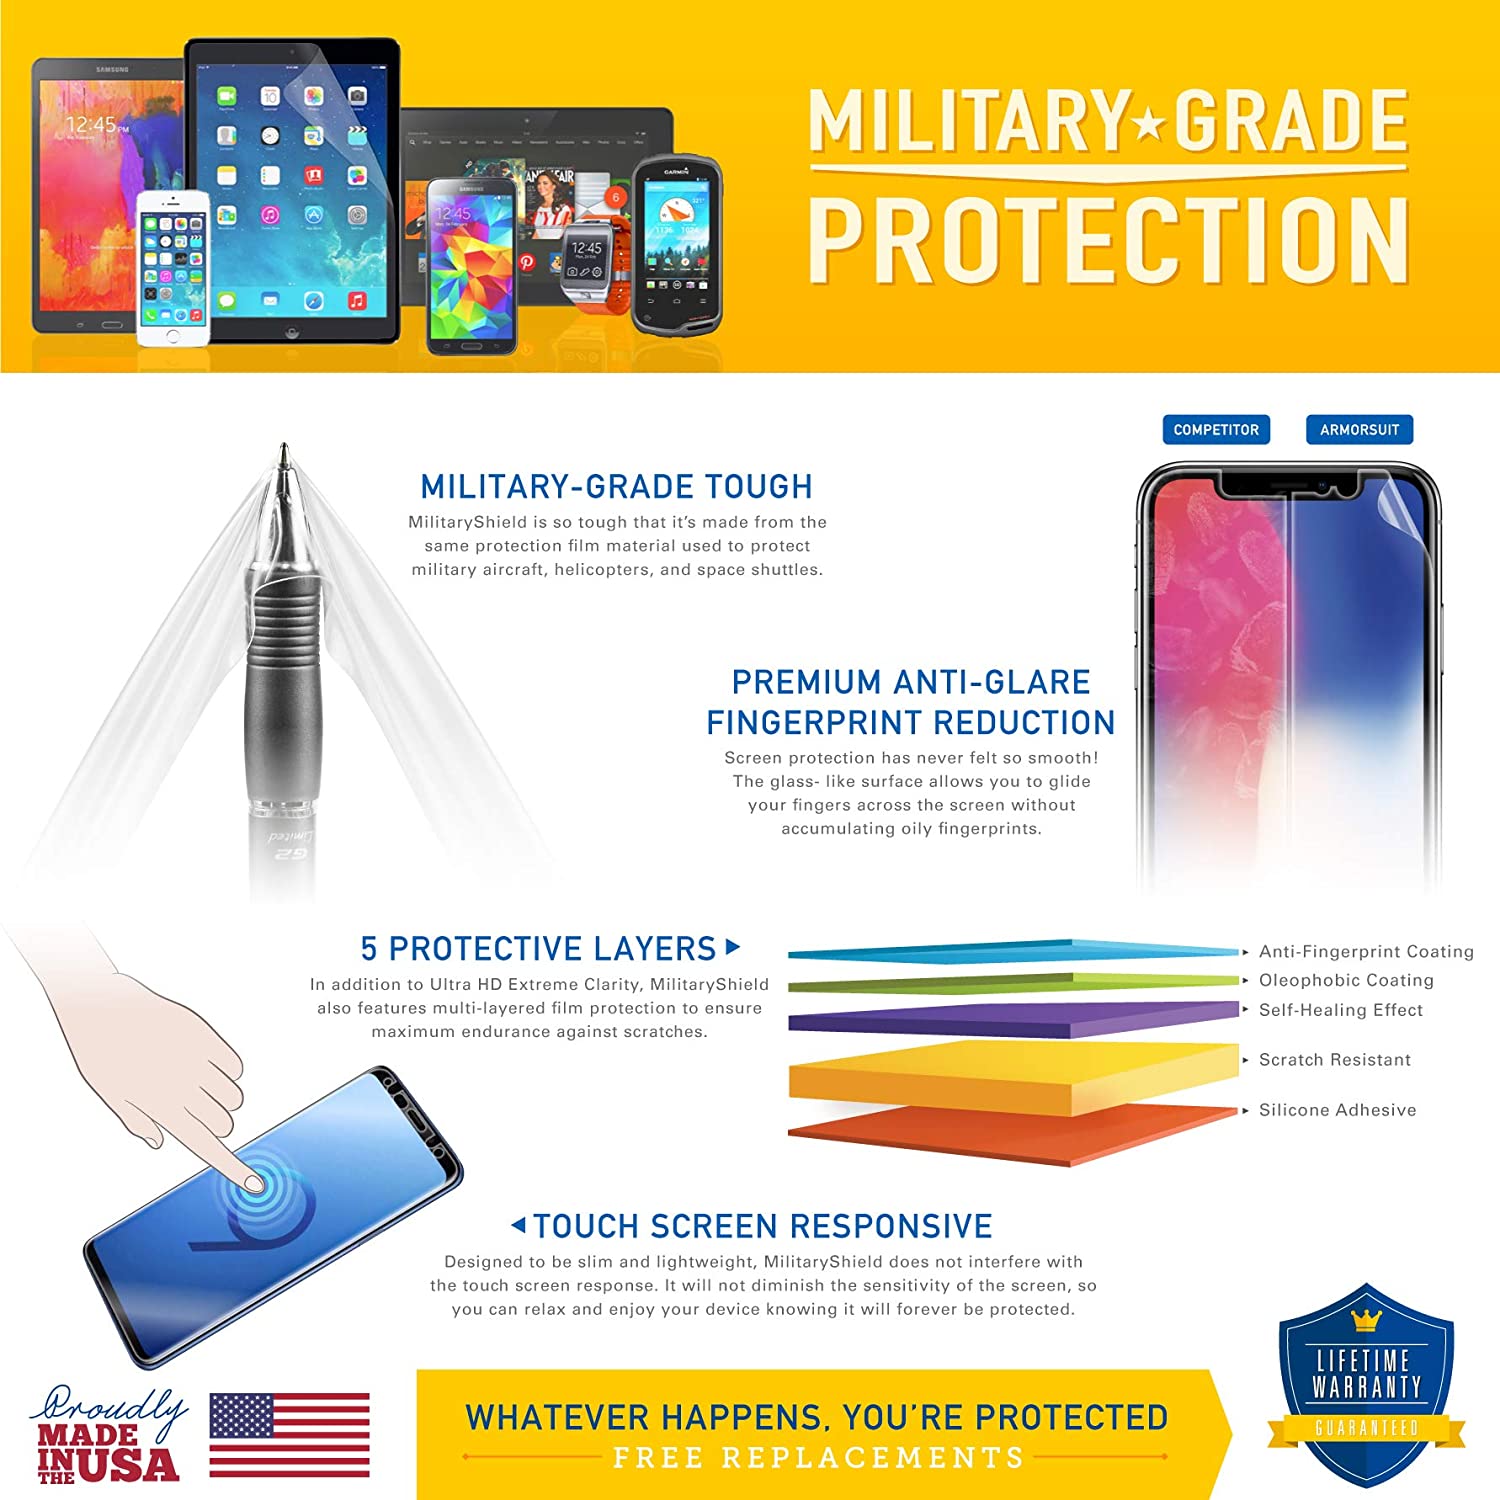 Samsung Galaxy Stratosphere II Screen Protector + Carbon Fiber Skin Protector